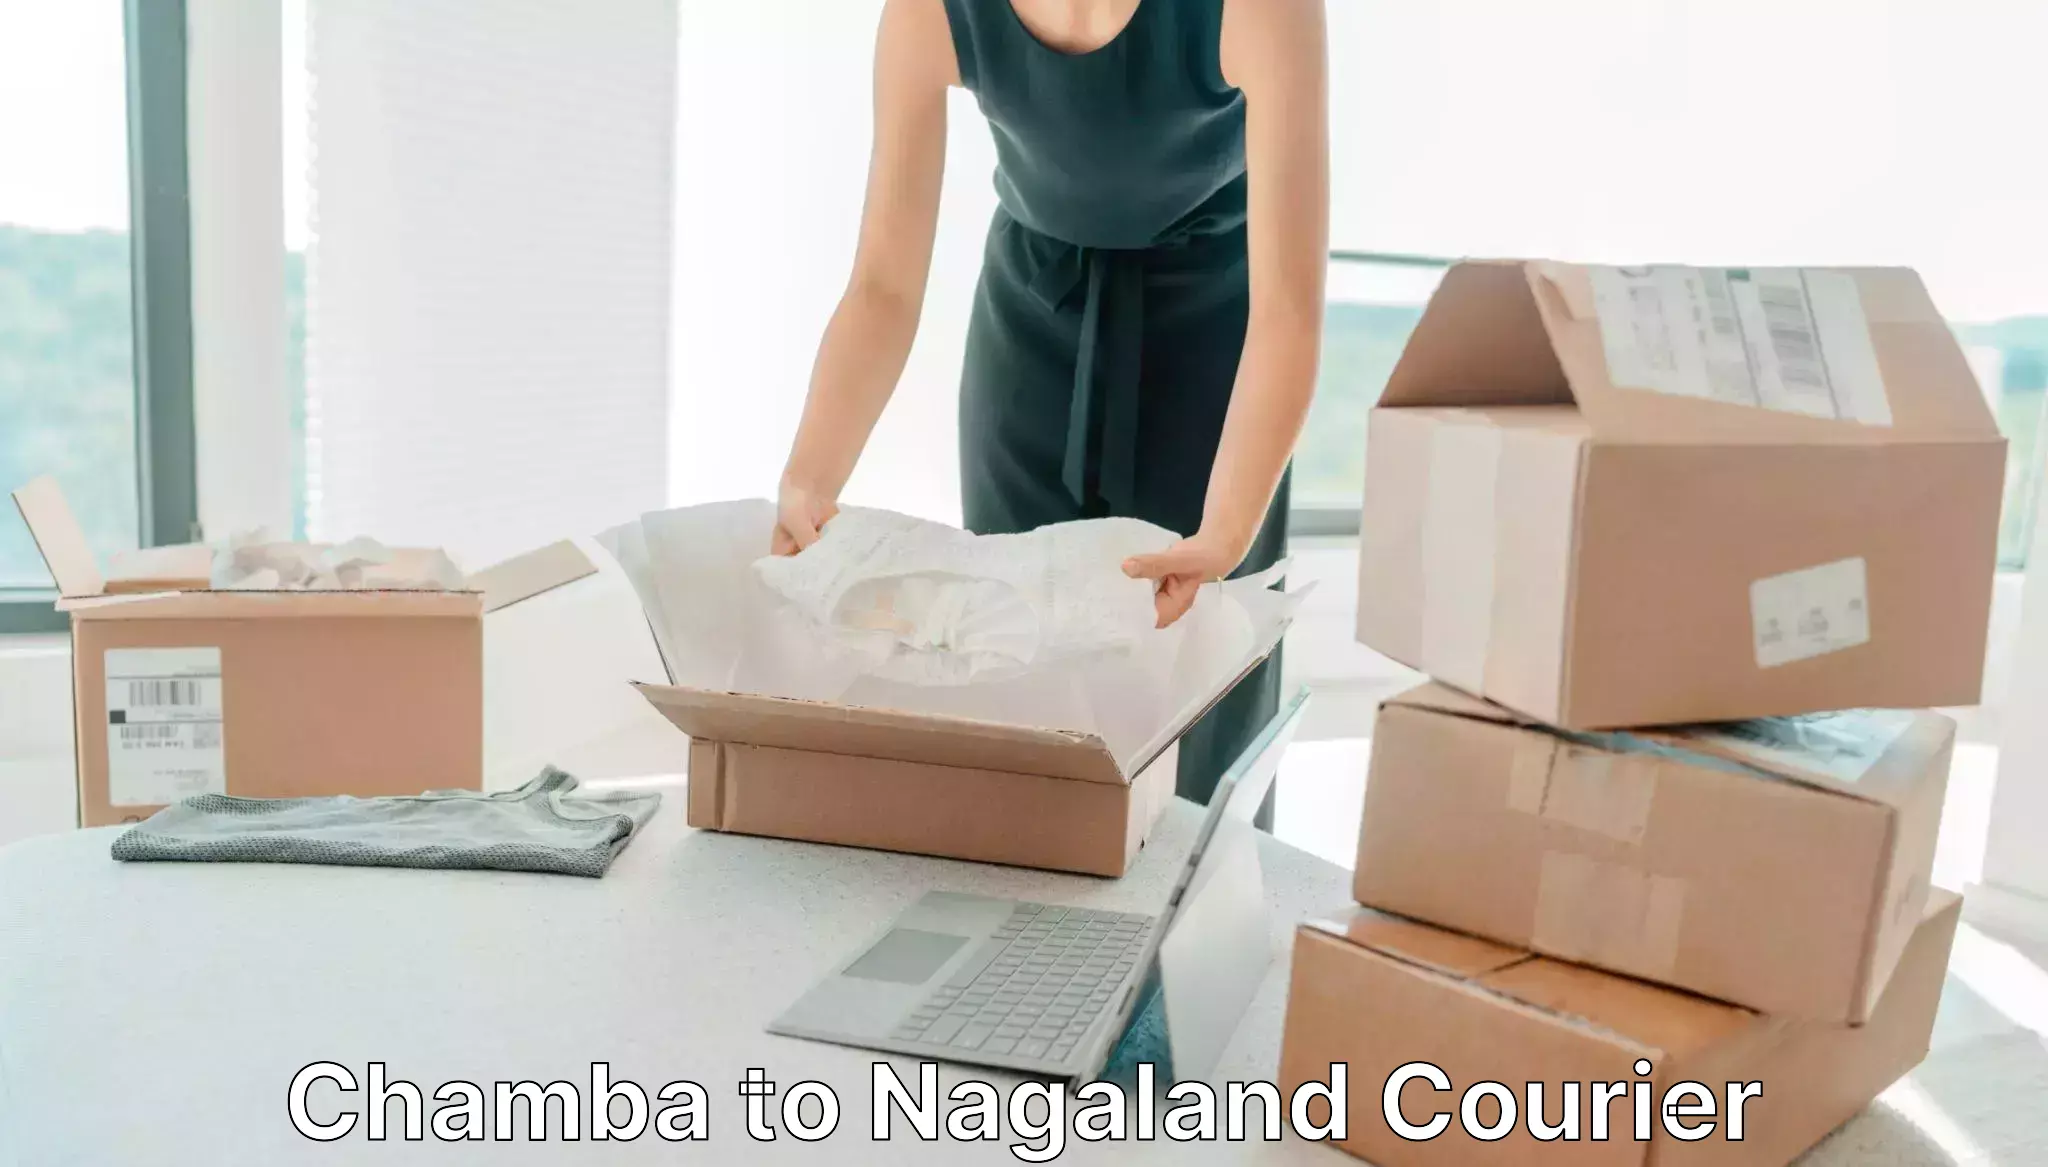 Door-to-door shipment Chamba to Nagaland